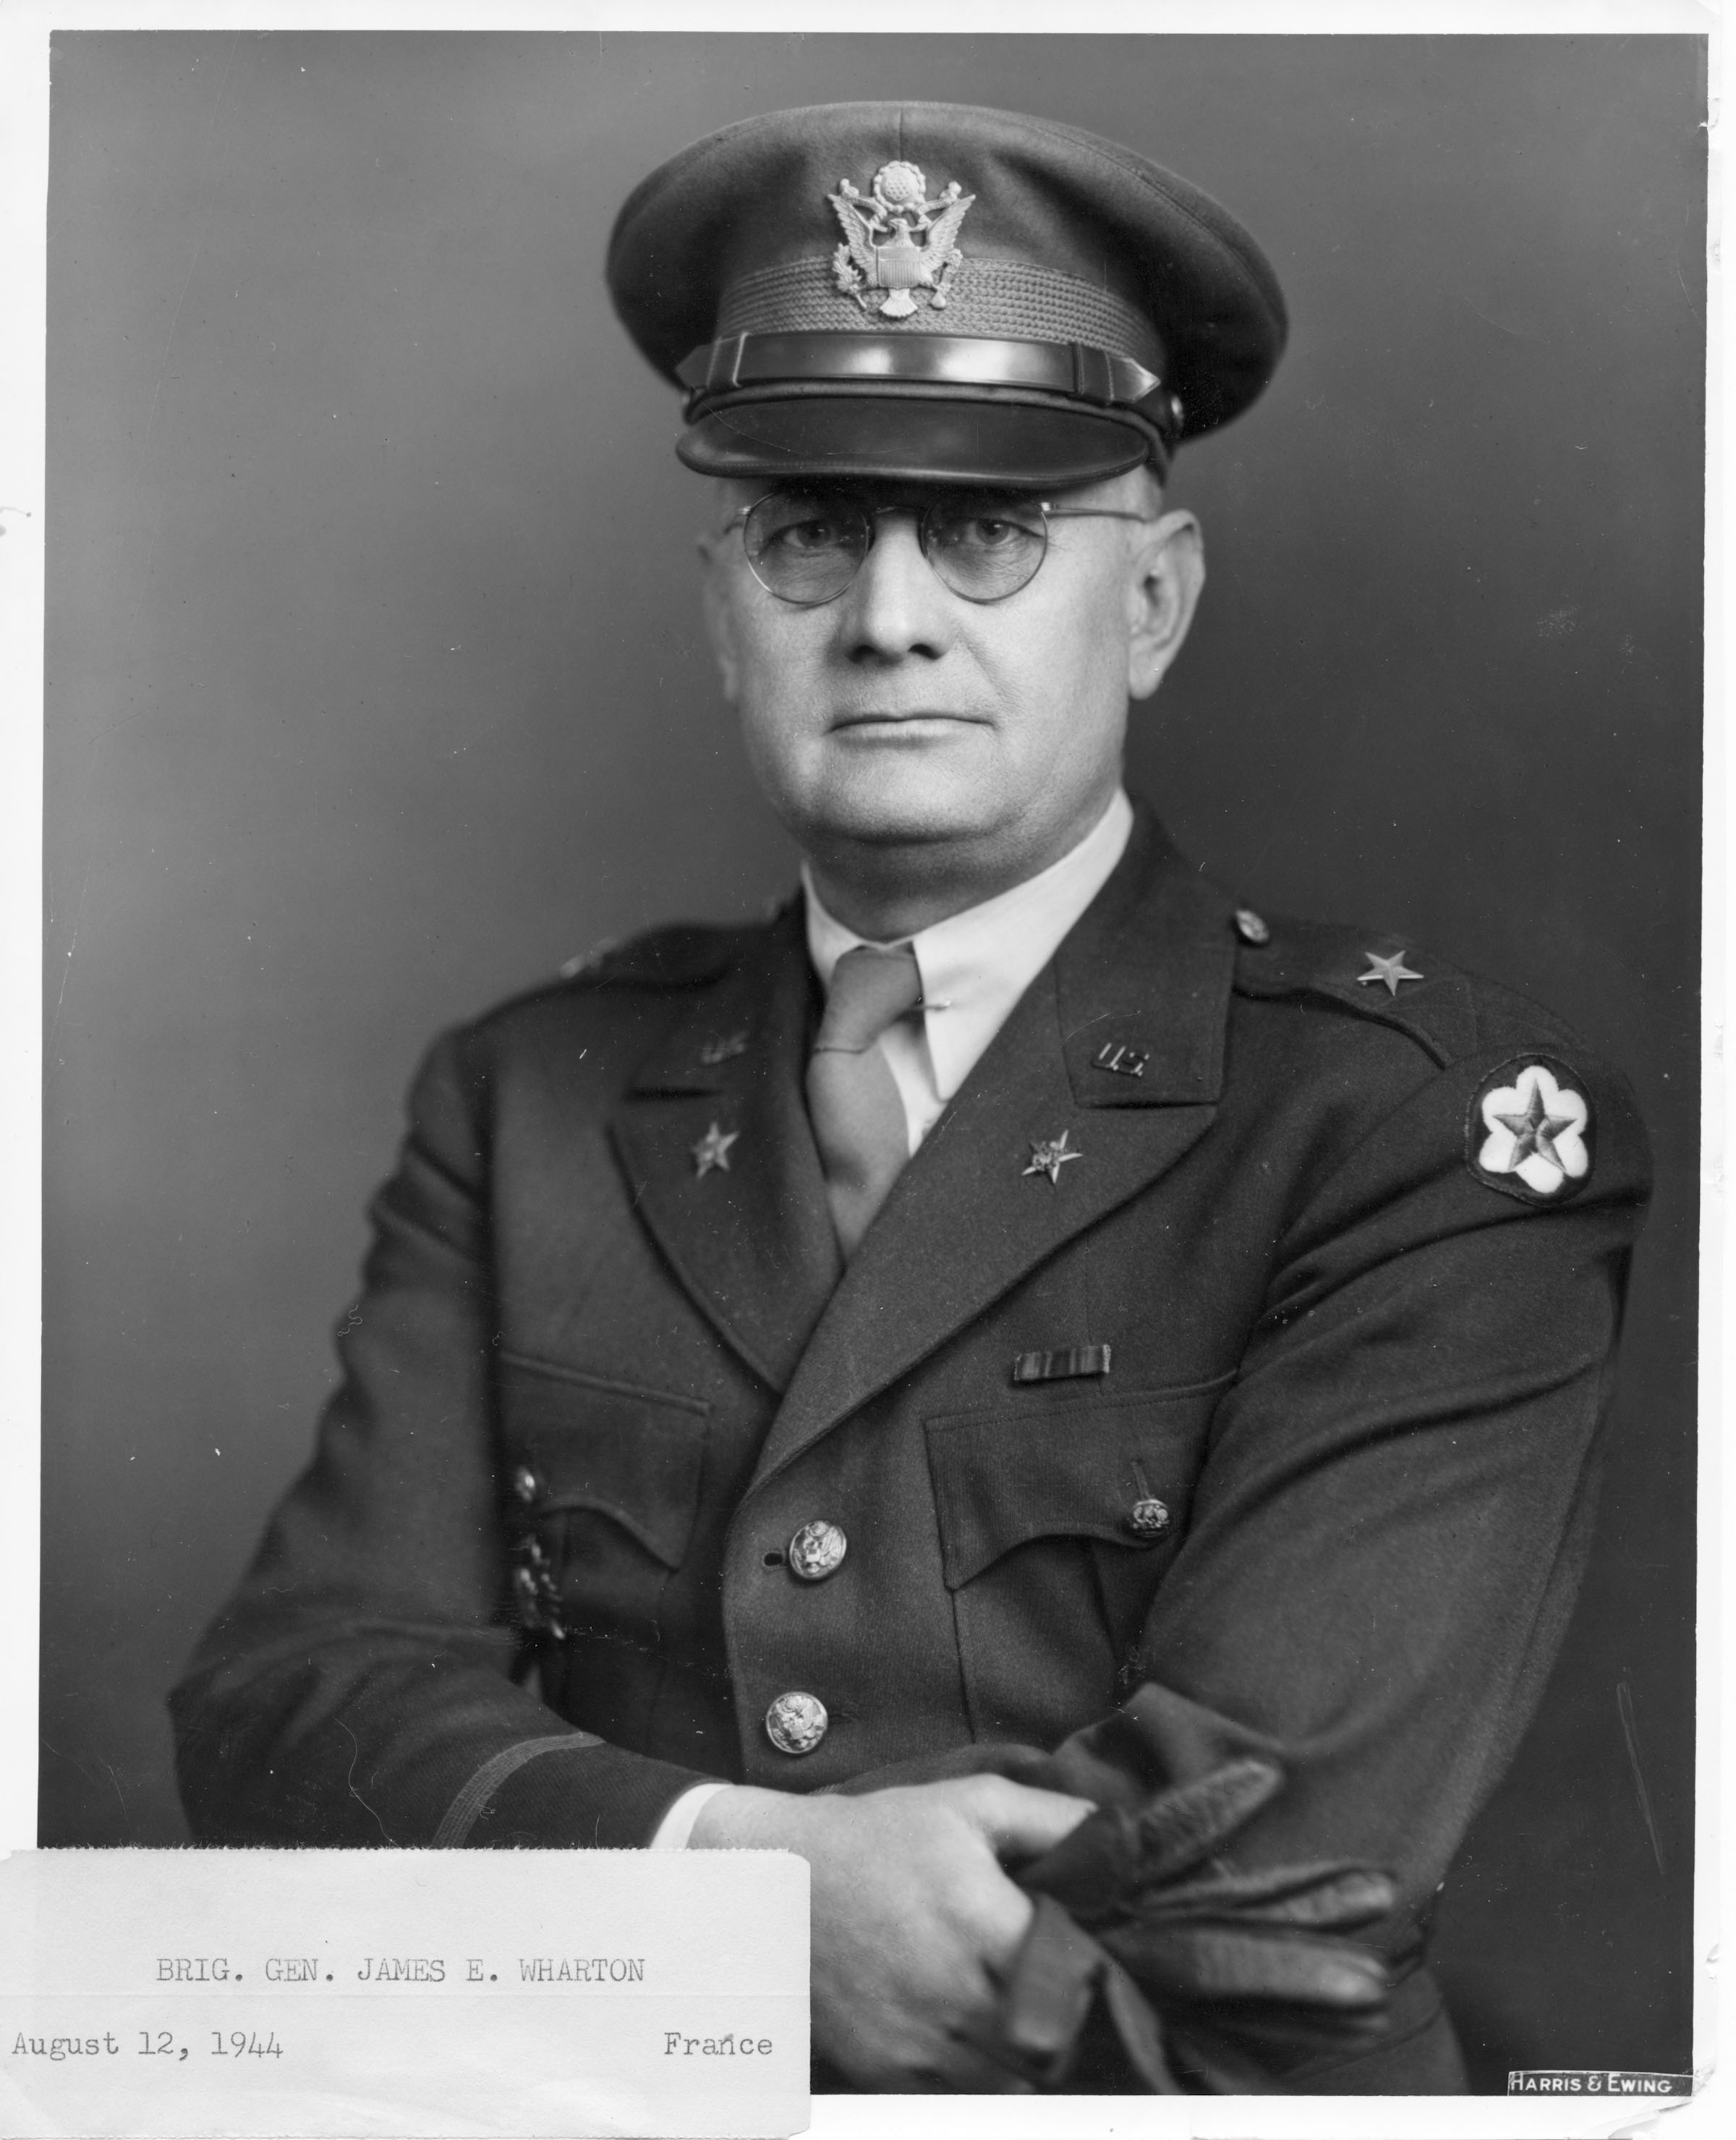 Brig. Gen. James E. Wharton